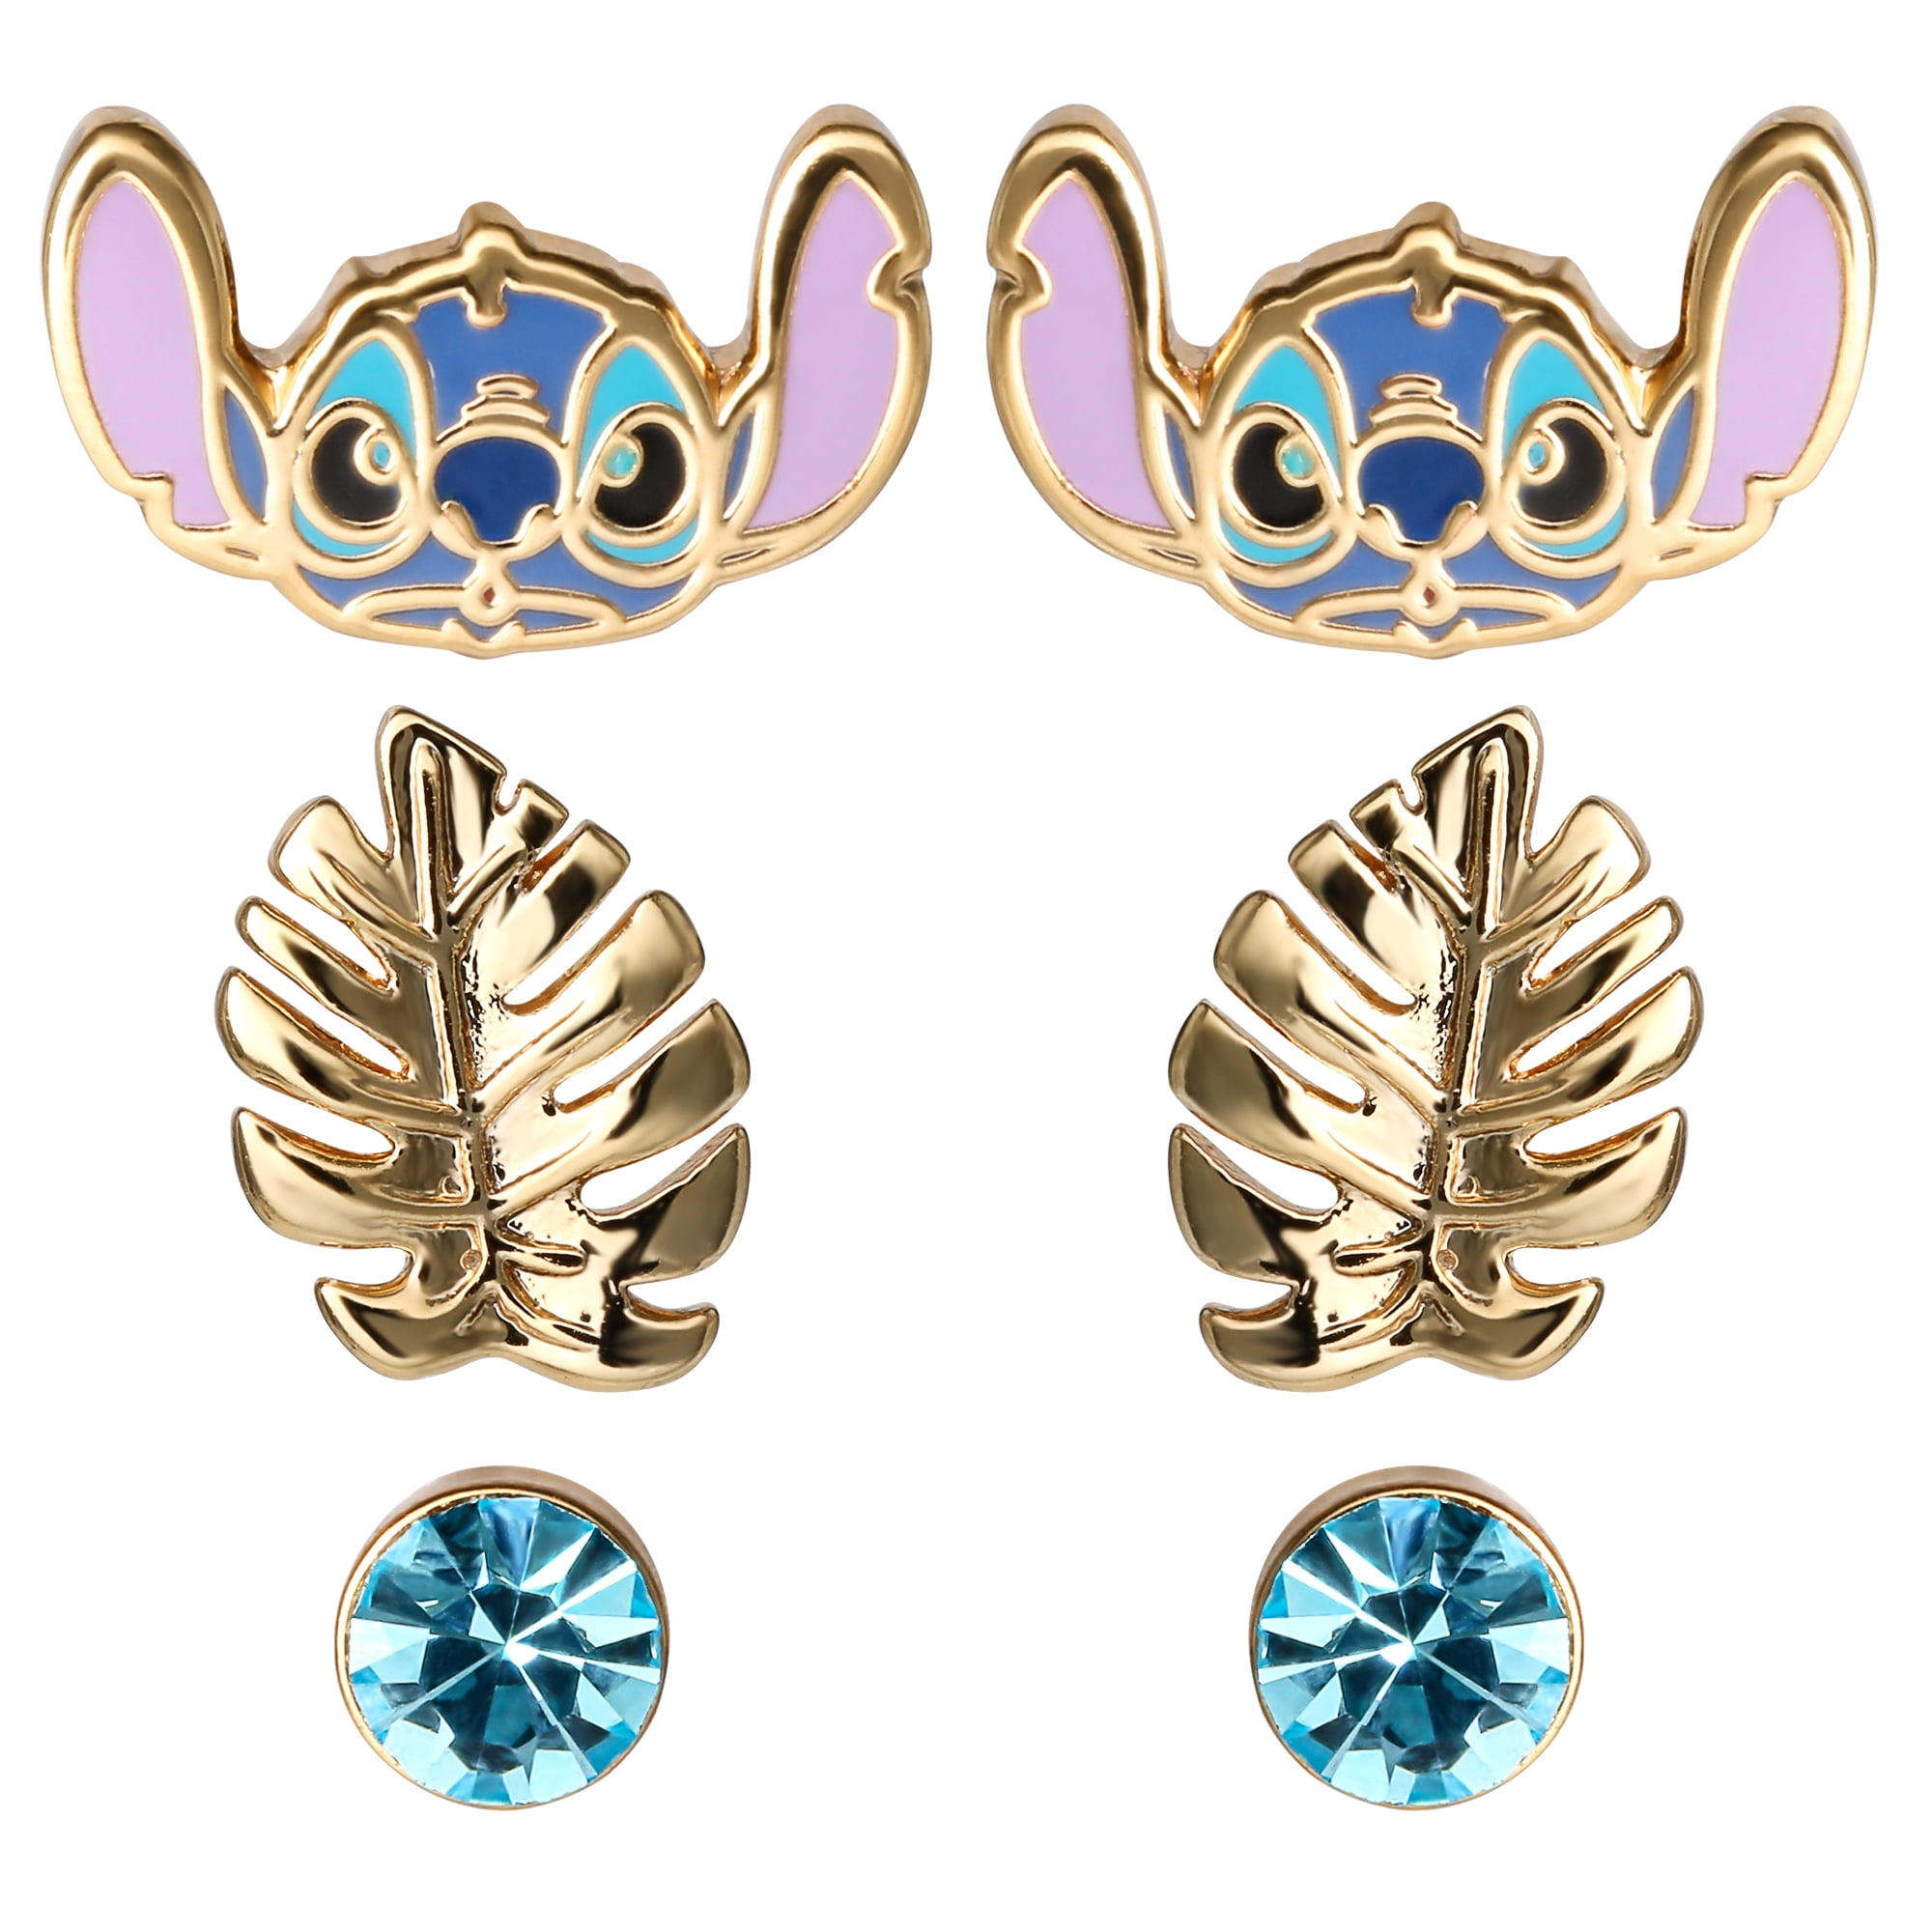 Earrings Stitch, Lilo and Stitch Disney - cute